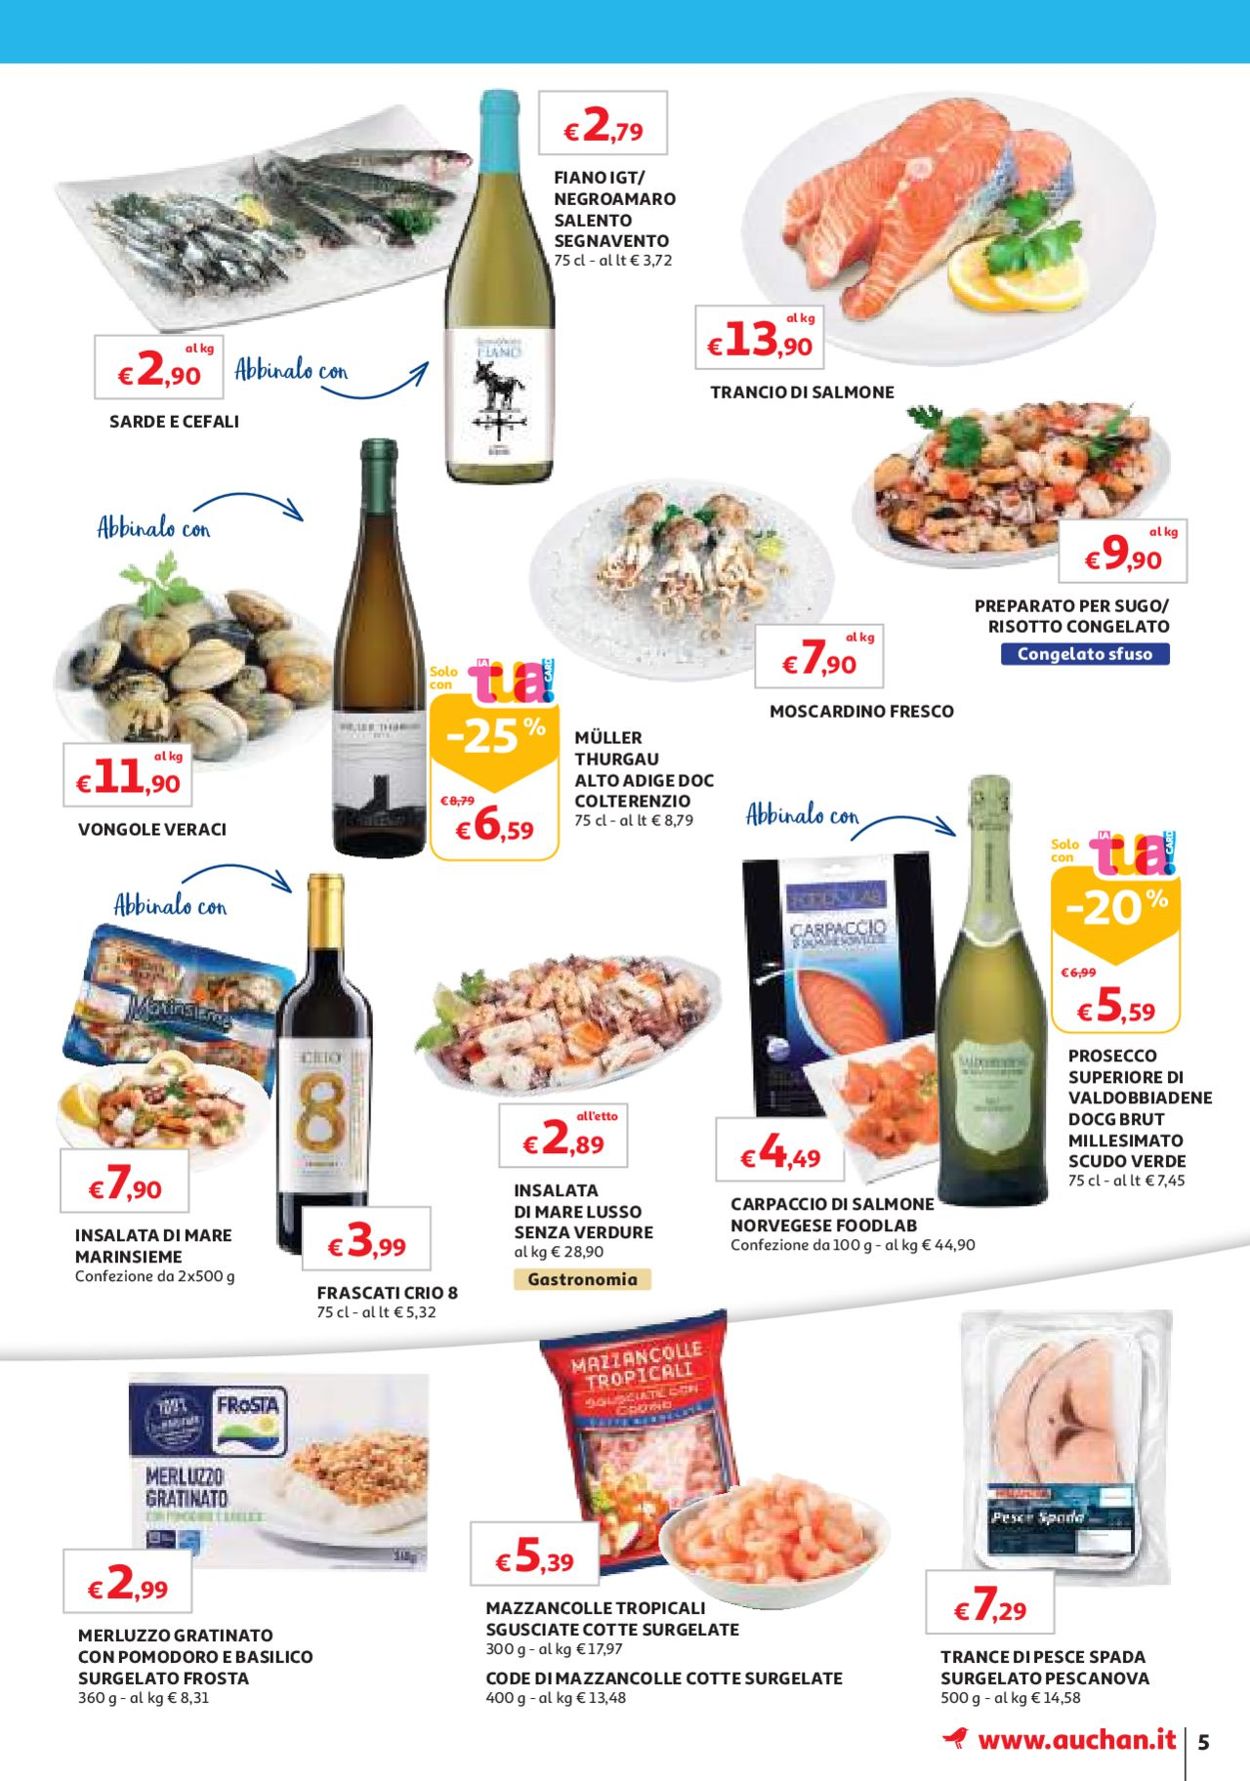 Volantino Auchan - Offerte 02/05-13/05/2019 (Pagina 5)